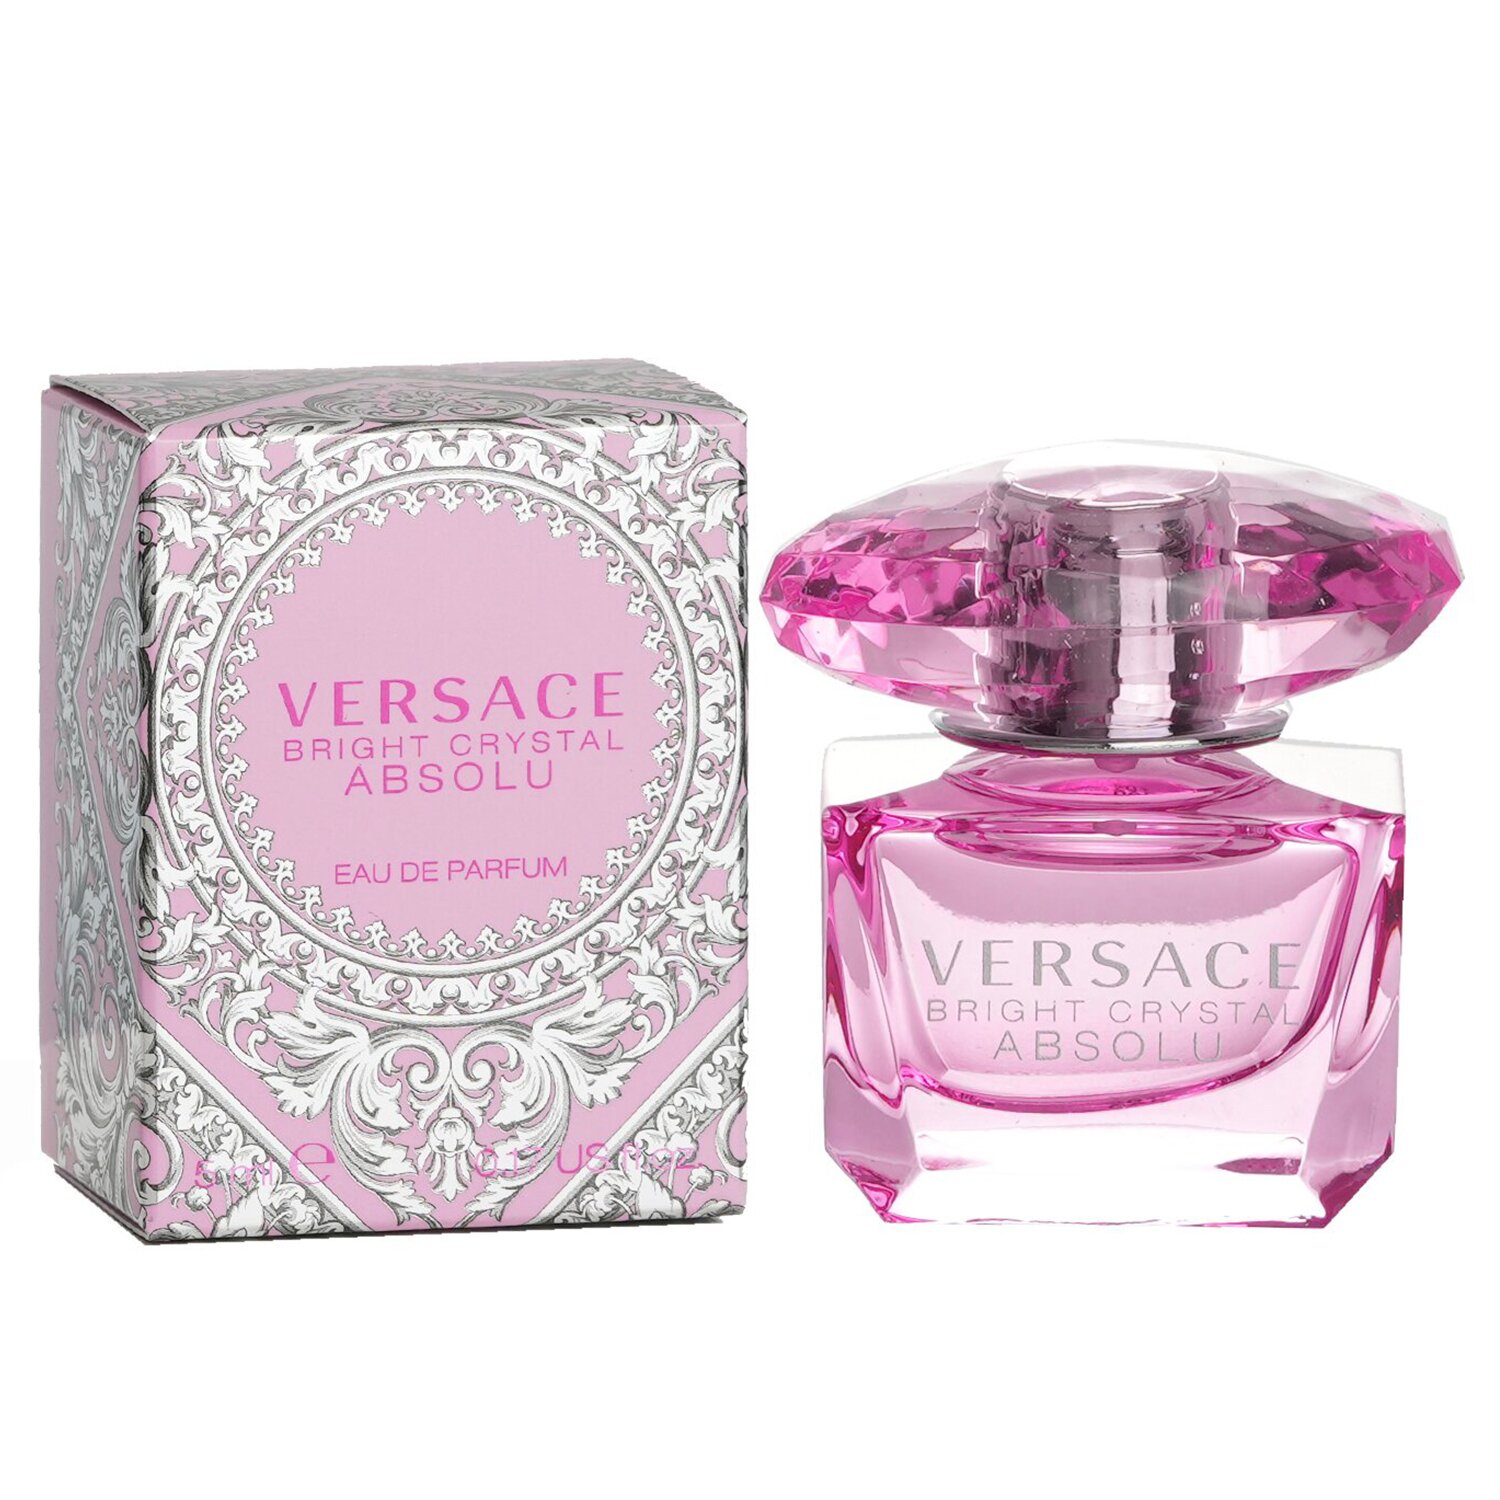 Versace Bright Crystal Absolu Eau De Parfum (Miniature) 5ml/0.17oz